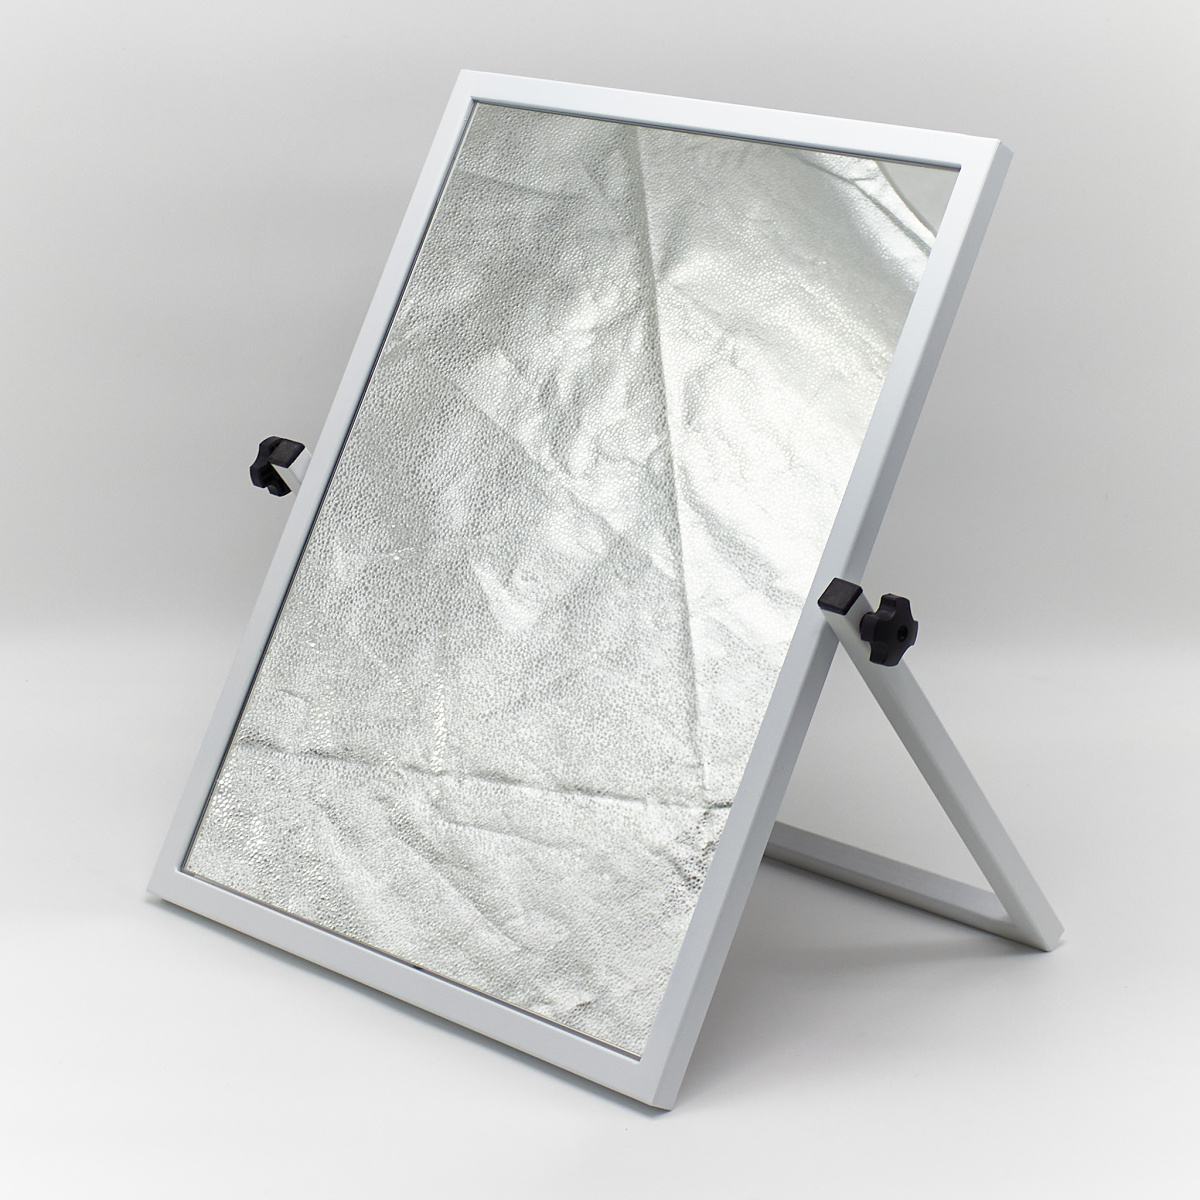 Зеркало напольное Privacy для обуви, белый муар, 510Lх575Hx270D мм